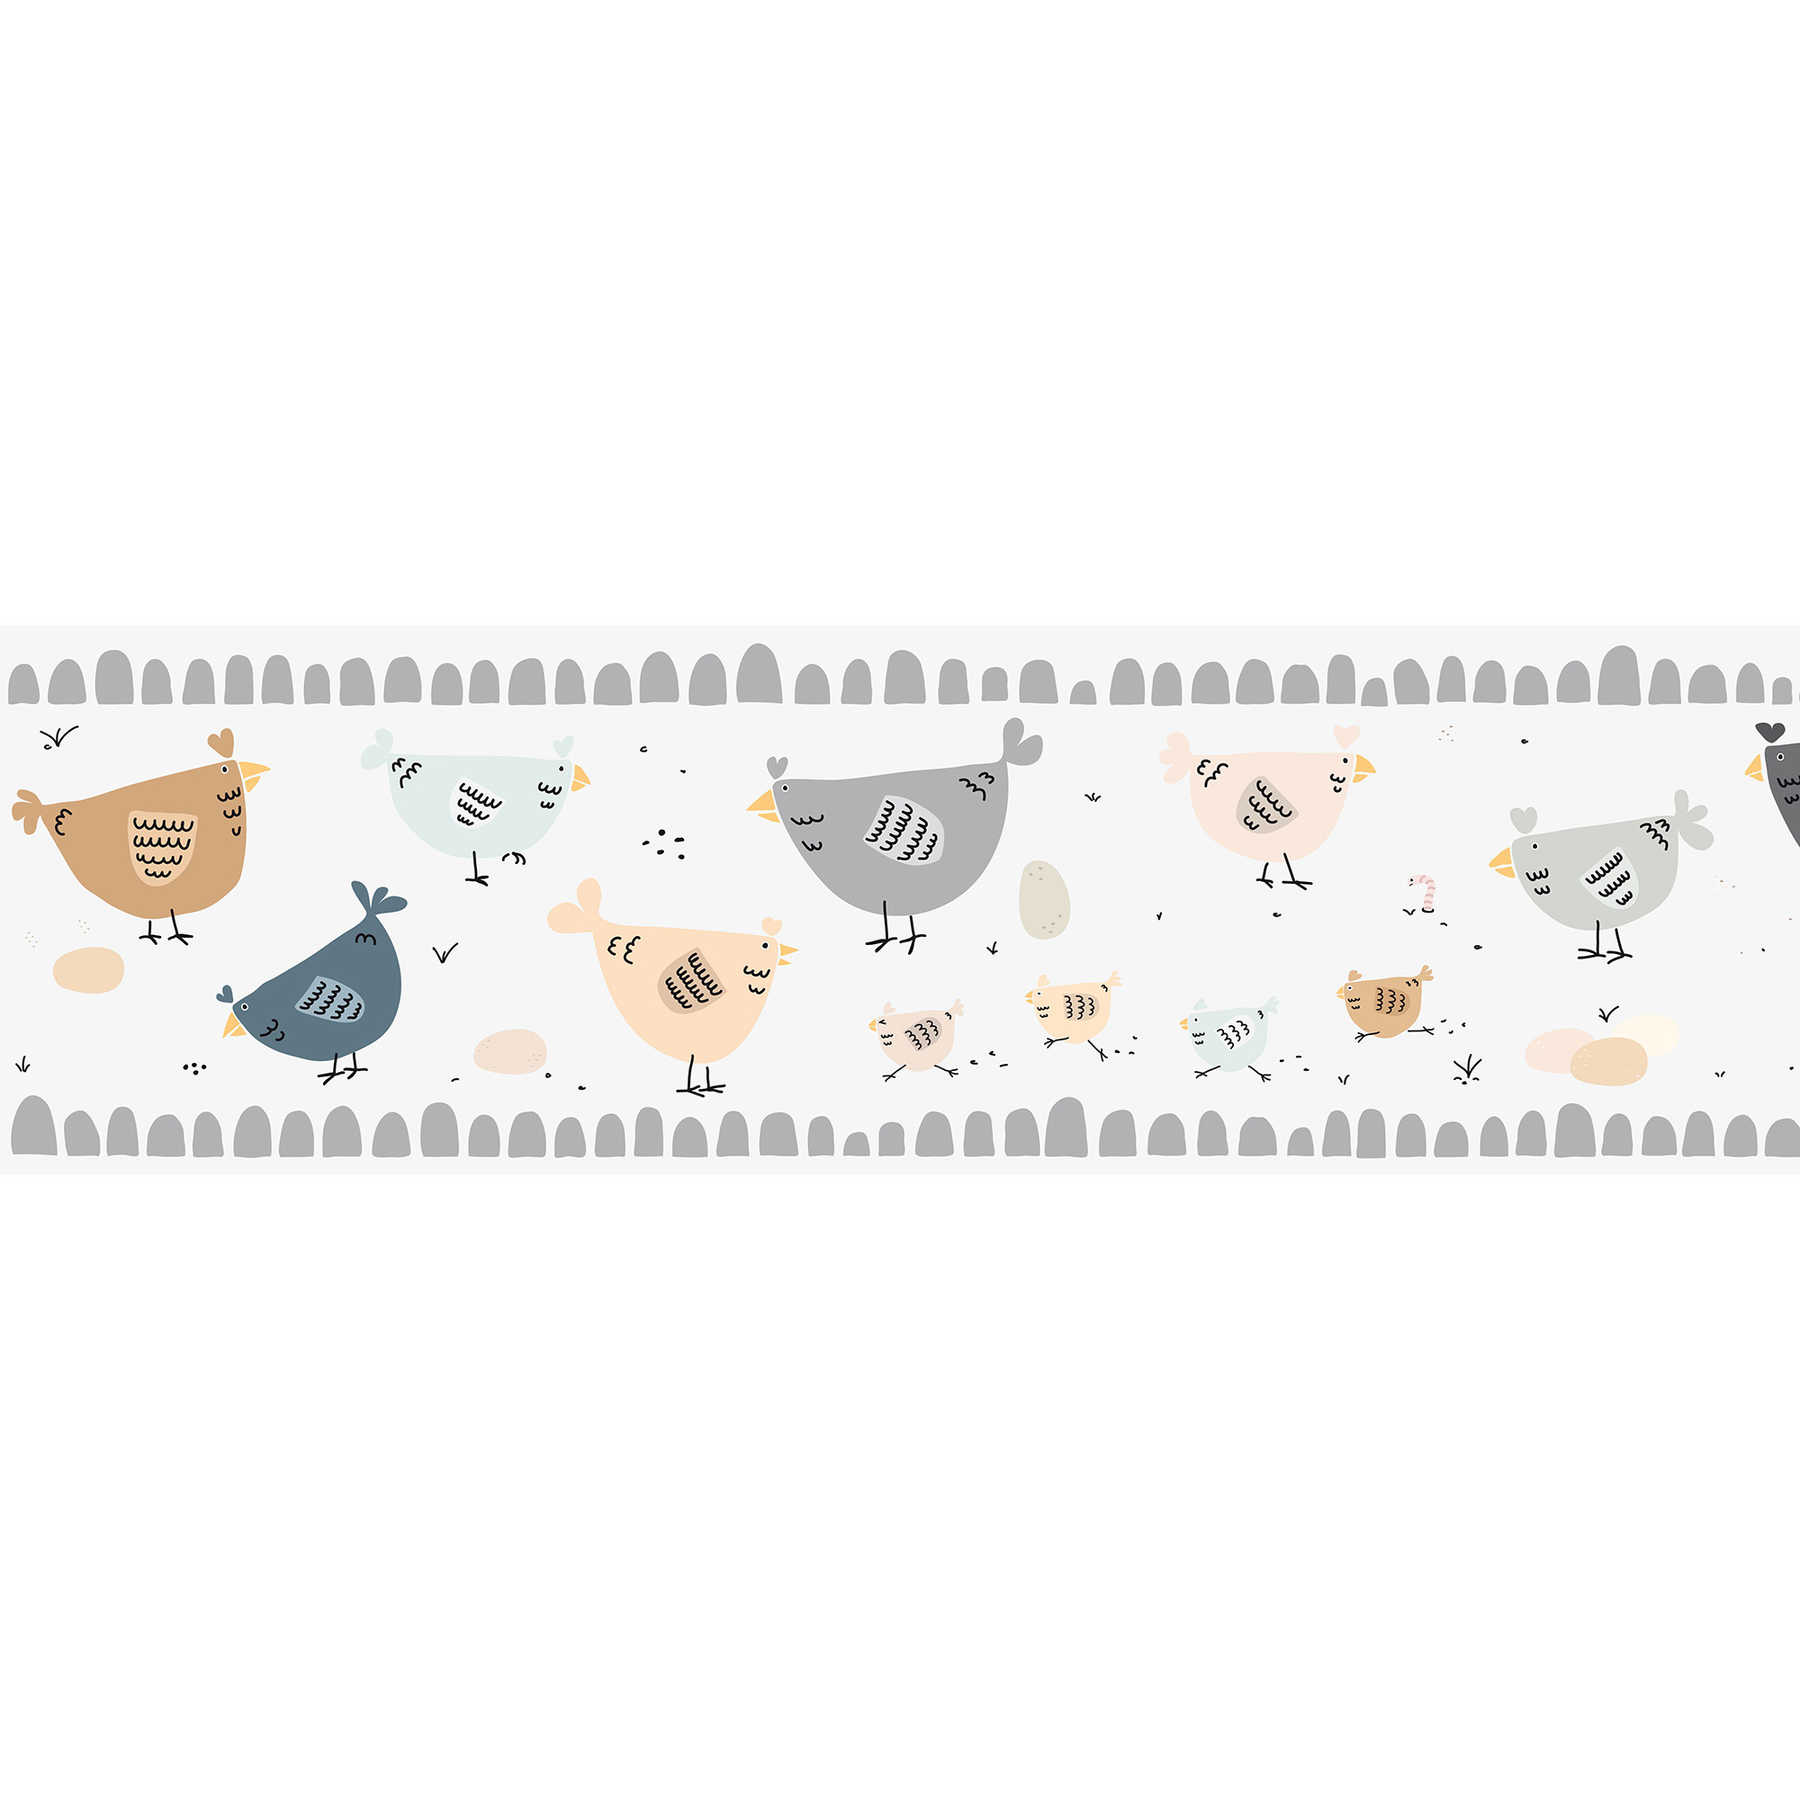 Lustige Borte "Hühnerstall" für Kinder - selbstklebend – Grau, Braun, Orange
